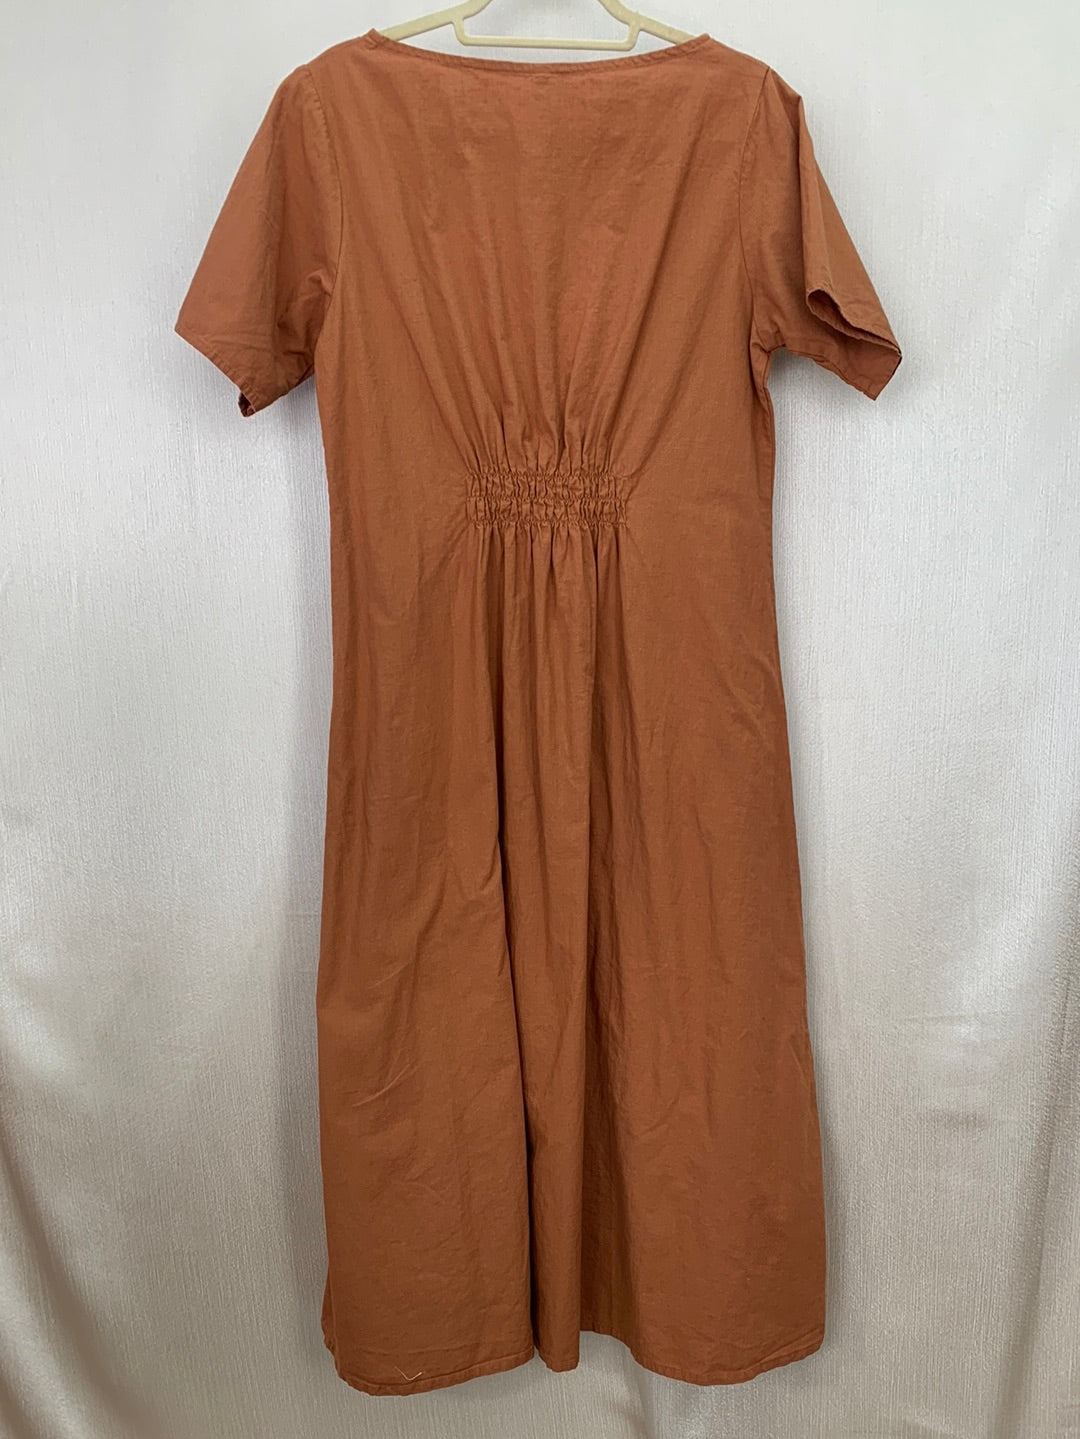 MATA TRADERS rust orange 100% Cotton Short Sleeve Midi Dress - XL